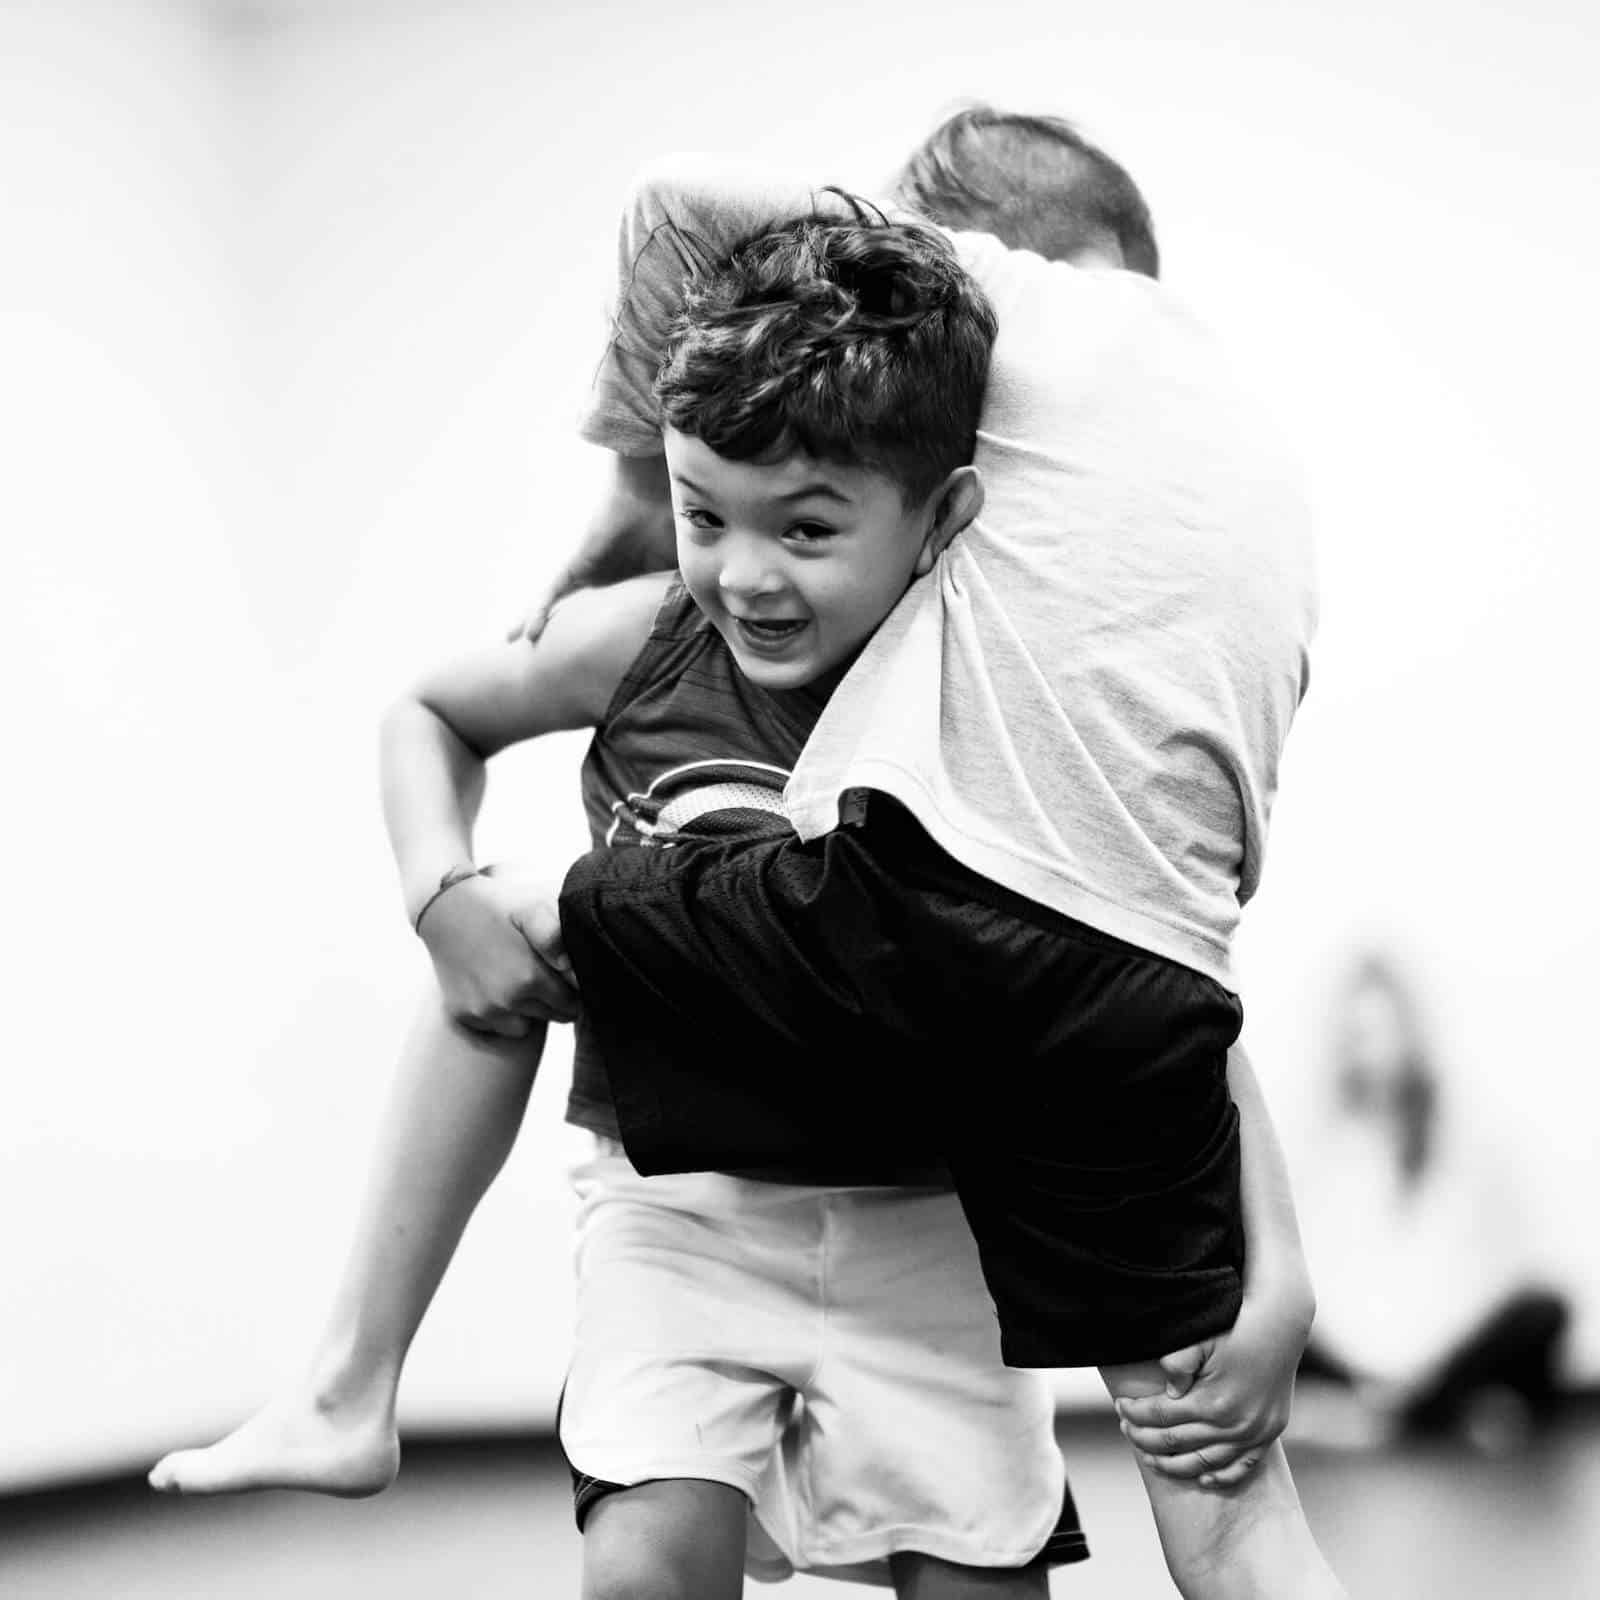 Featured image for “Kids Advanced Jiu-Jitsu”